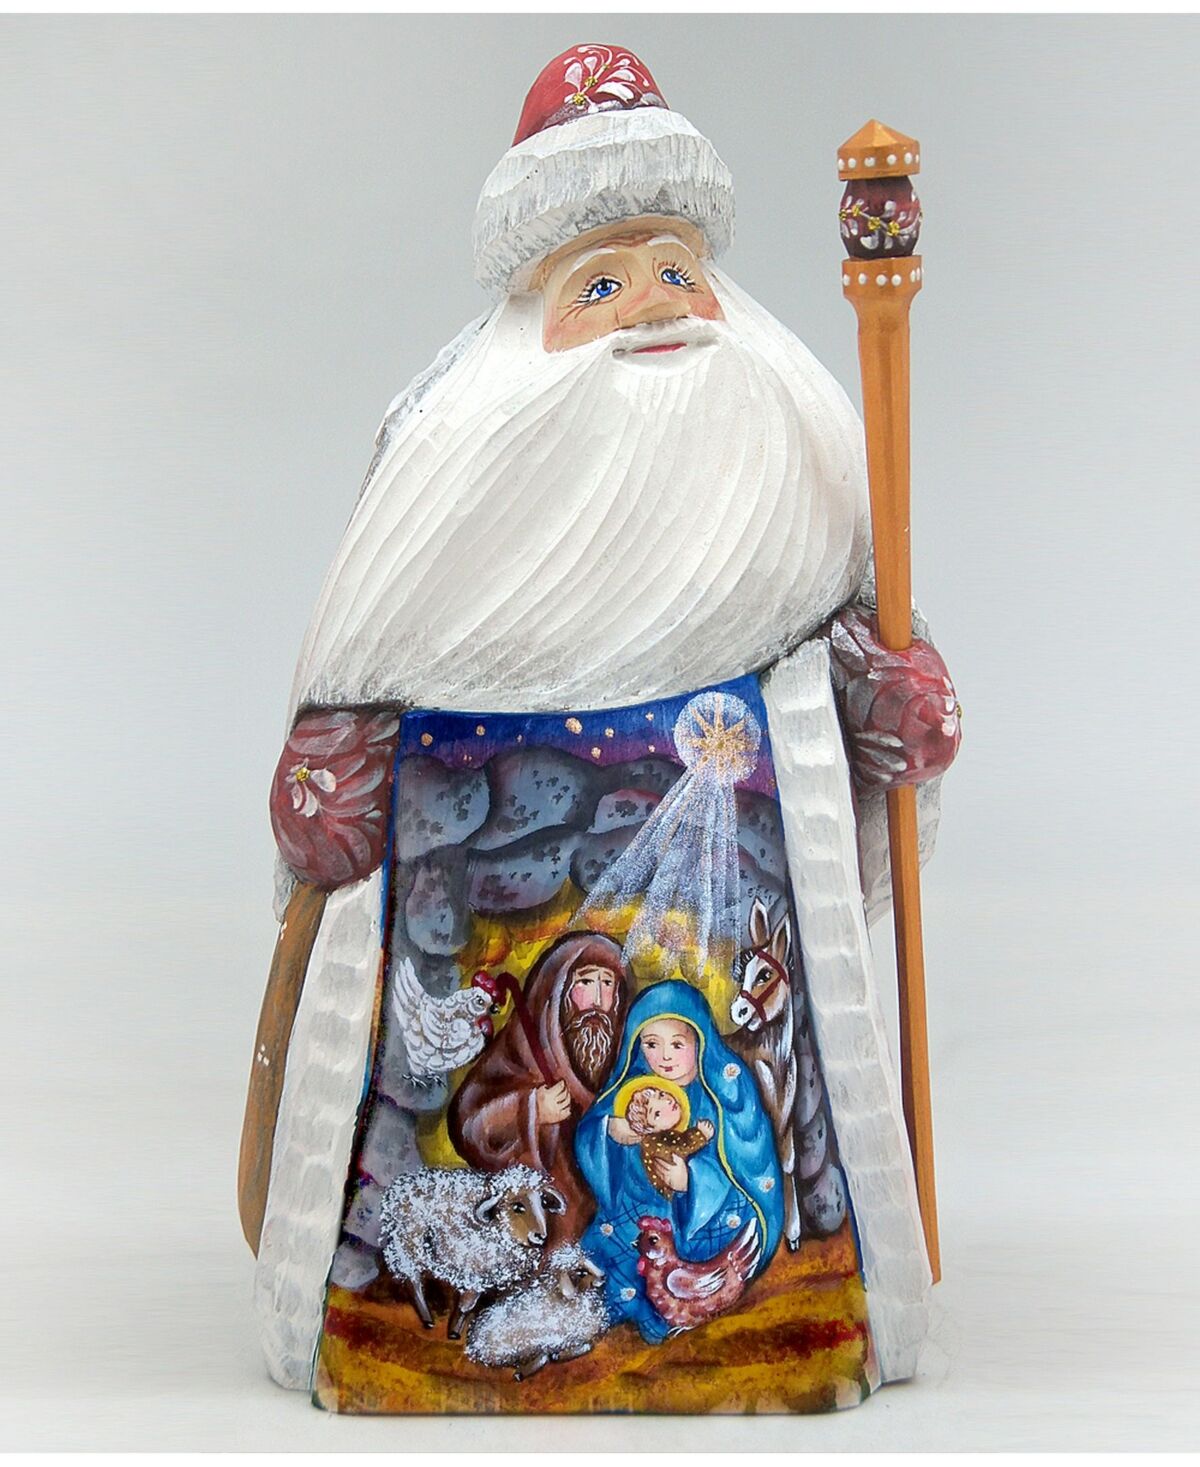 G.DeBrekht Woodcarved Hand Painted Nativity Santa Figurine - Multi